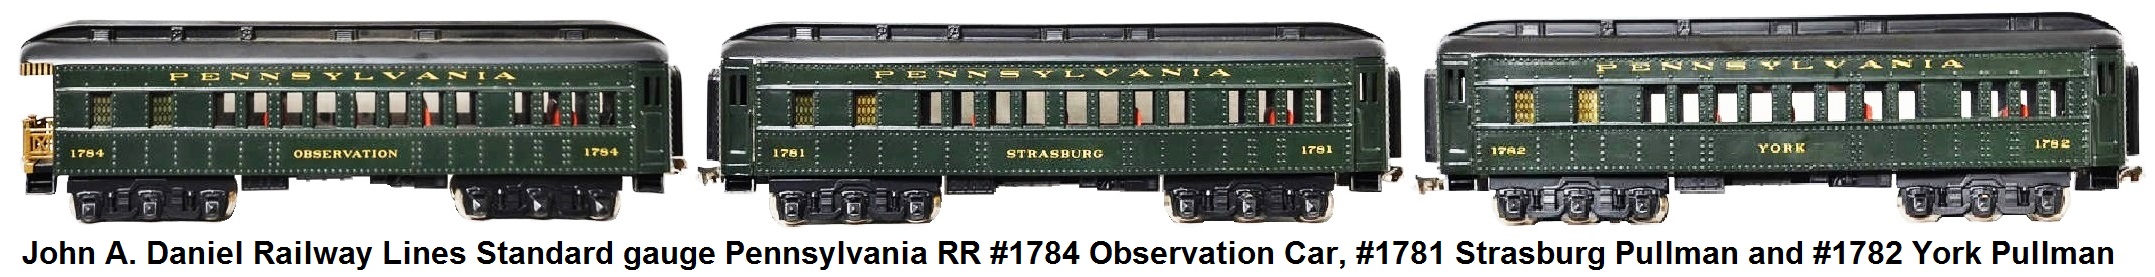 John A. Daniel Railway Lines Standard gauge #1784 Observation Car, #1781 Strasburg Pullman and #1782 York Pullman in Brunswick Green